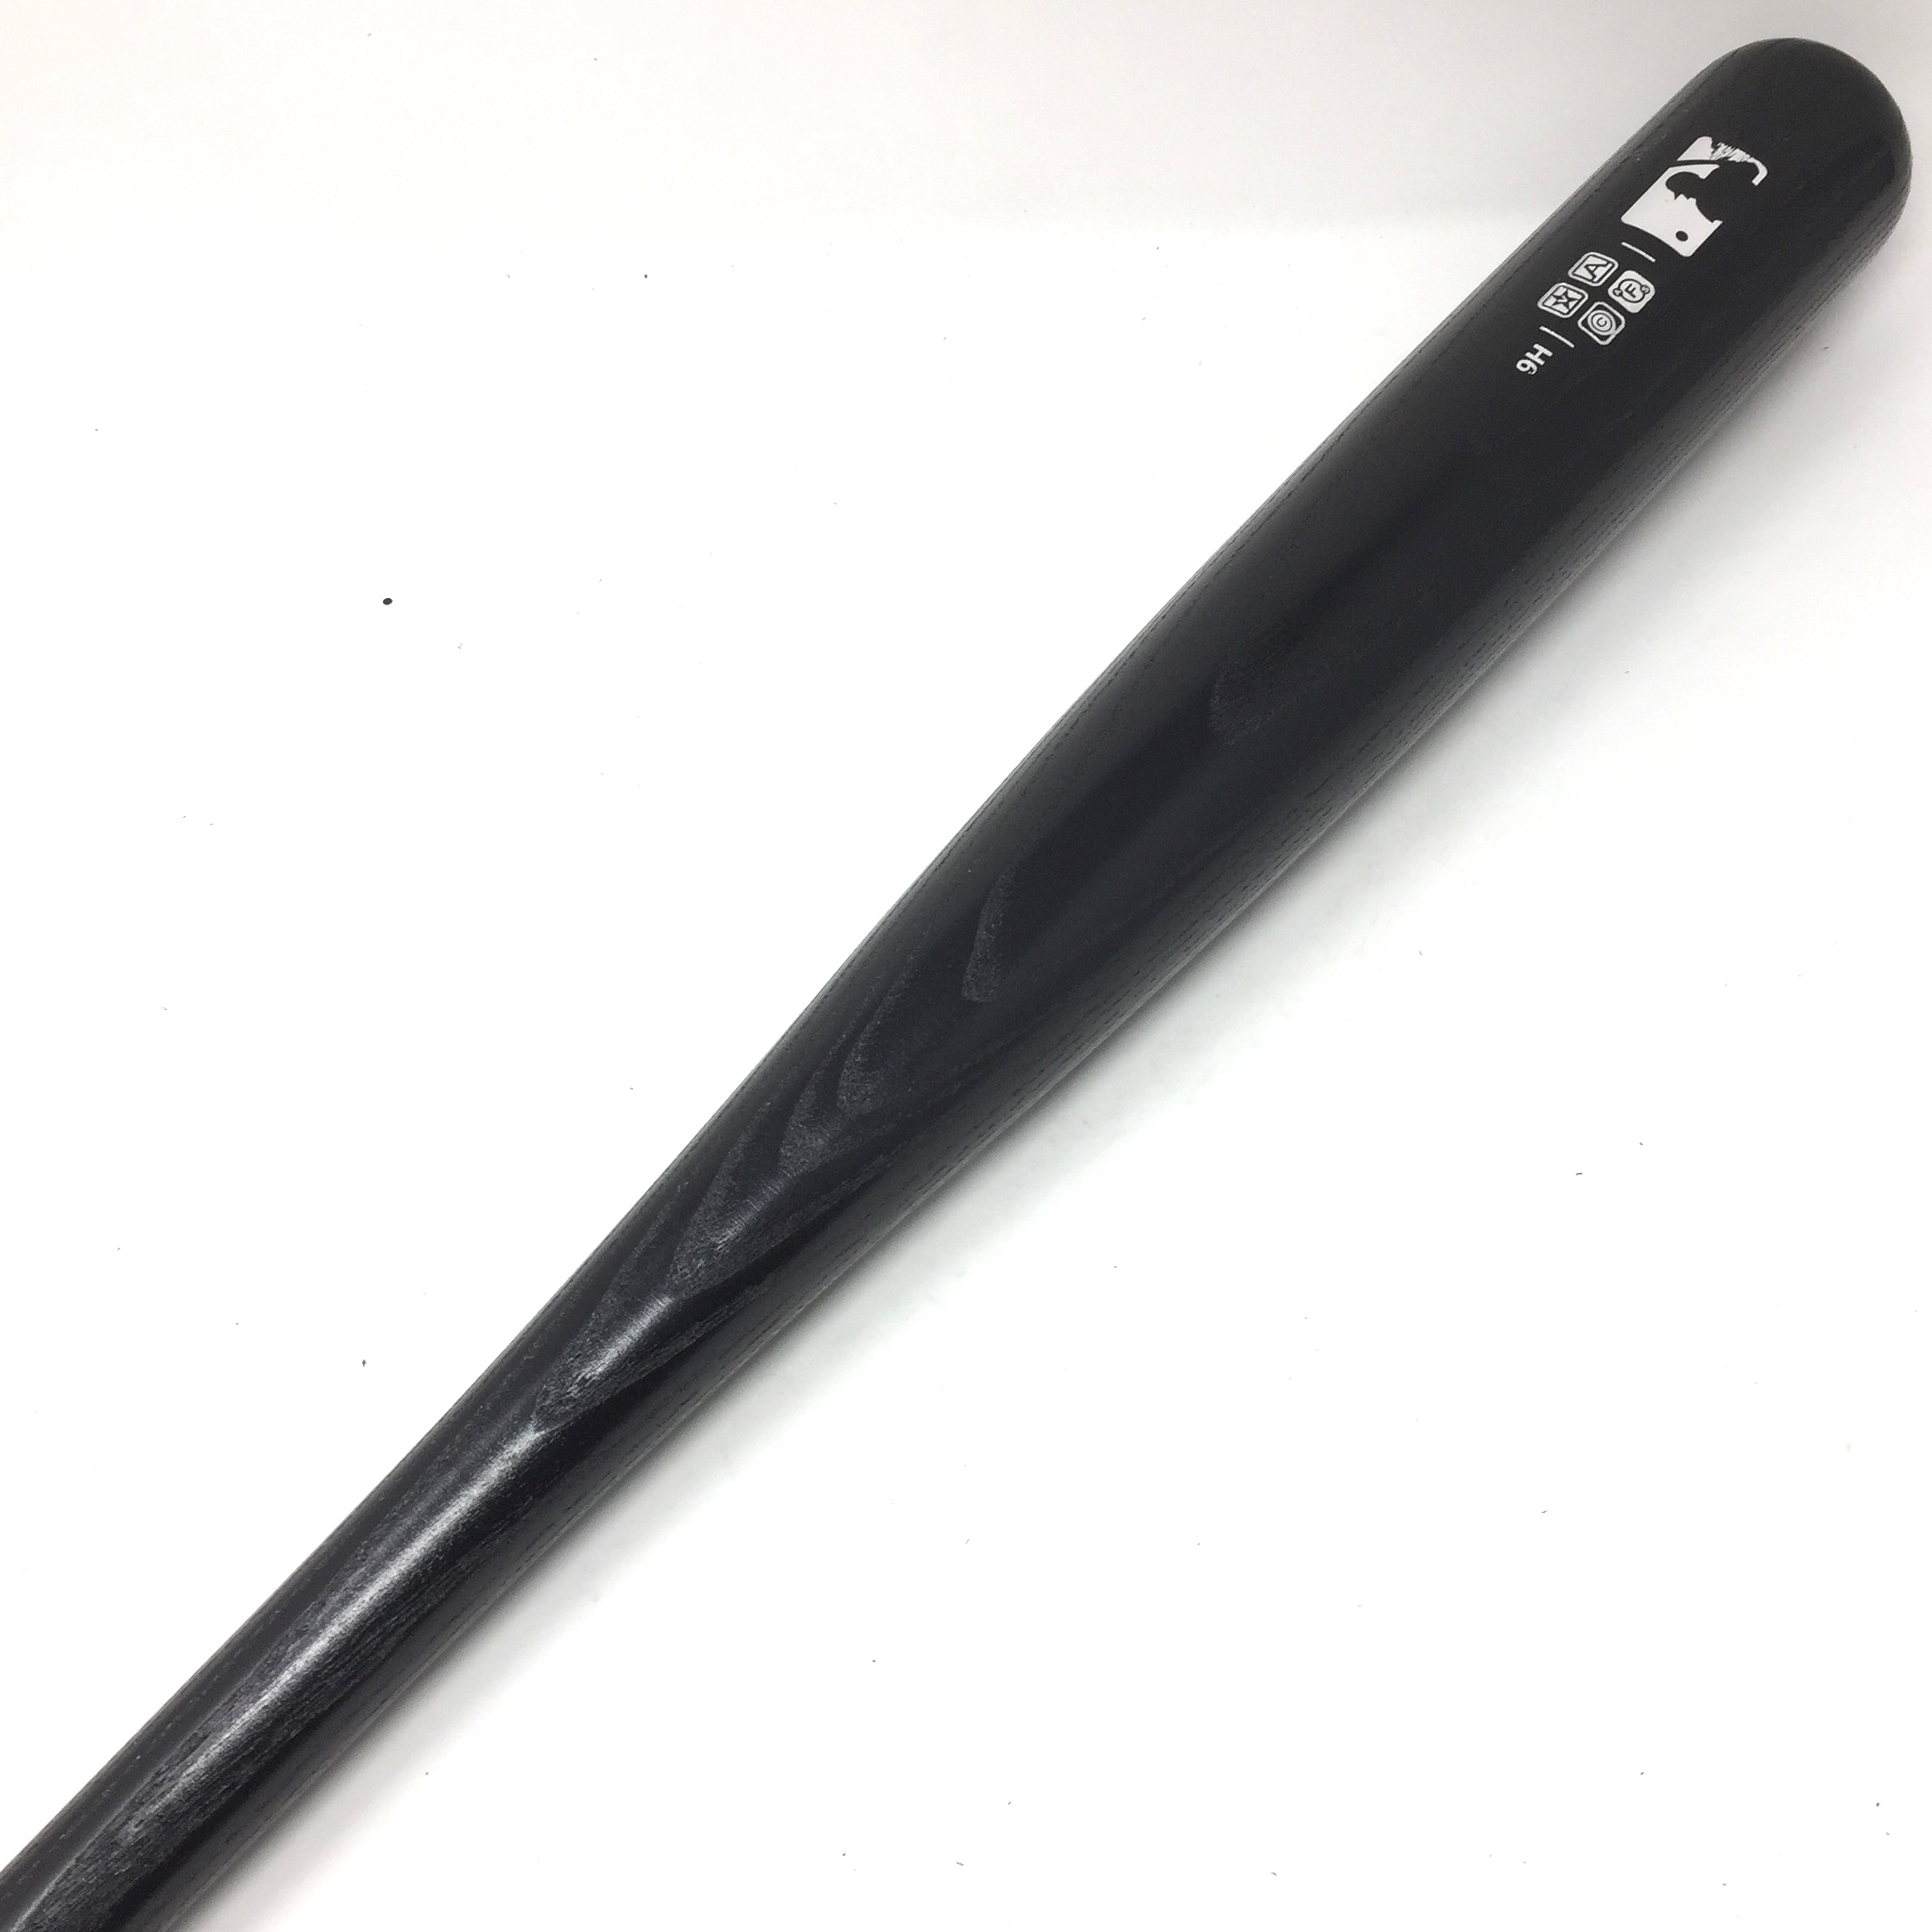 louisville-slugger-xx-prime-ash-pro-m356-34-inch-wood-baseball-bat WBXA14P56NBK34 Louisville Does Not Apply <p>Louisville Slugger XX Prime Ash Pro M356 34 Inch Wood Baseball